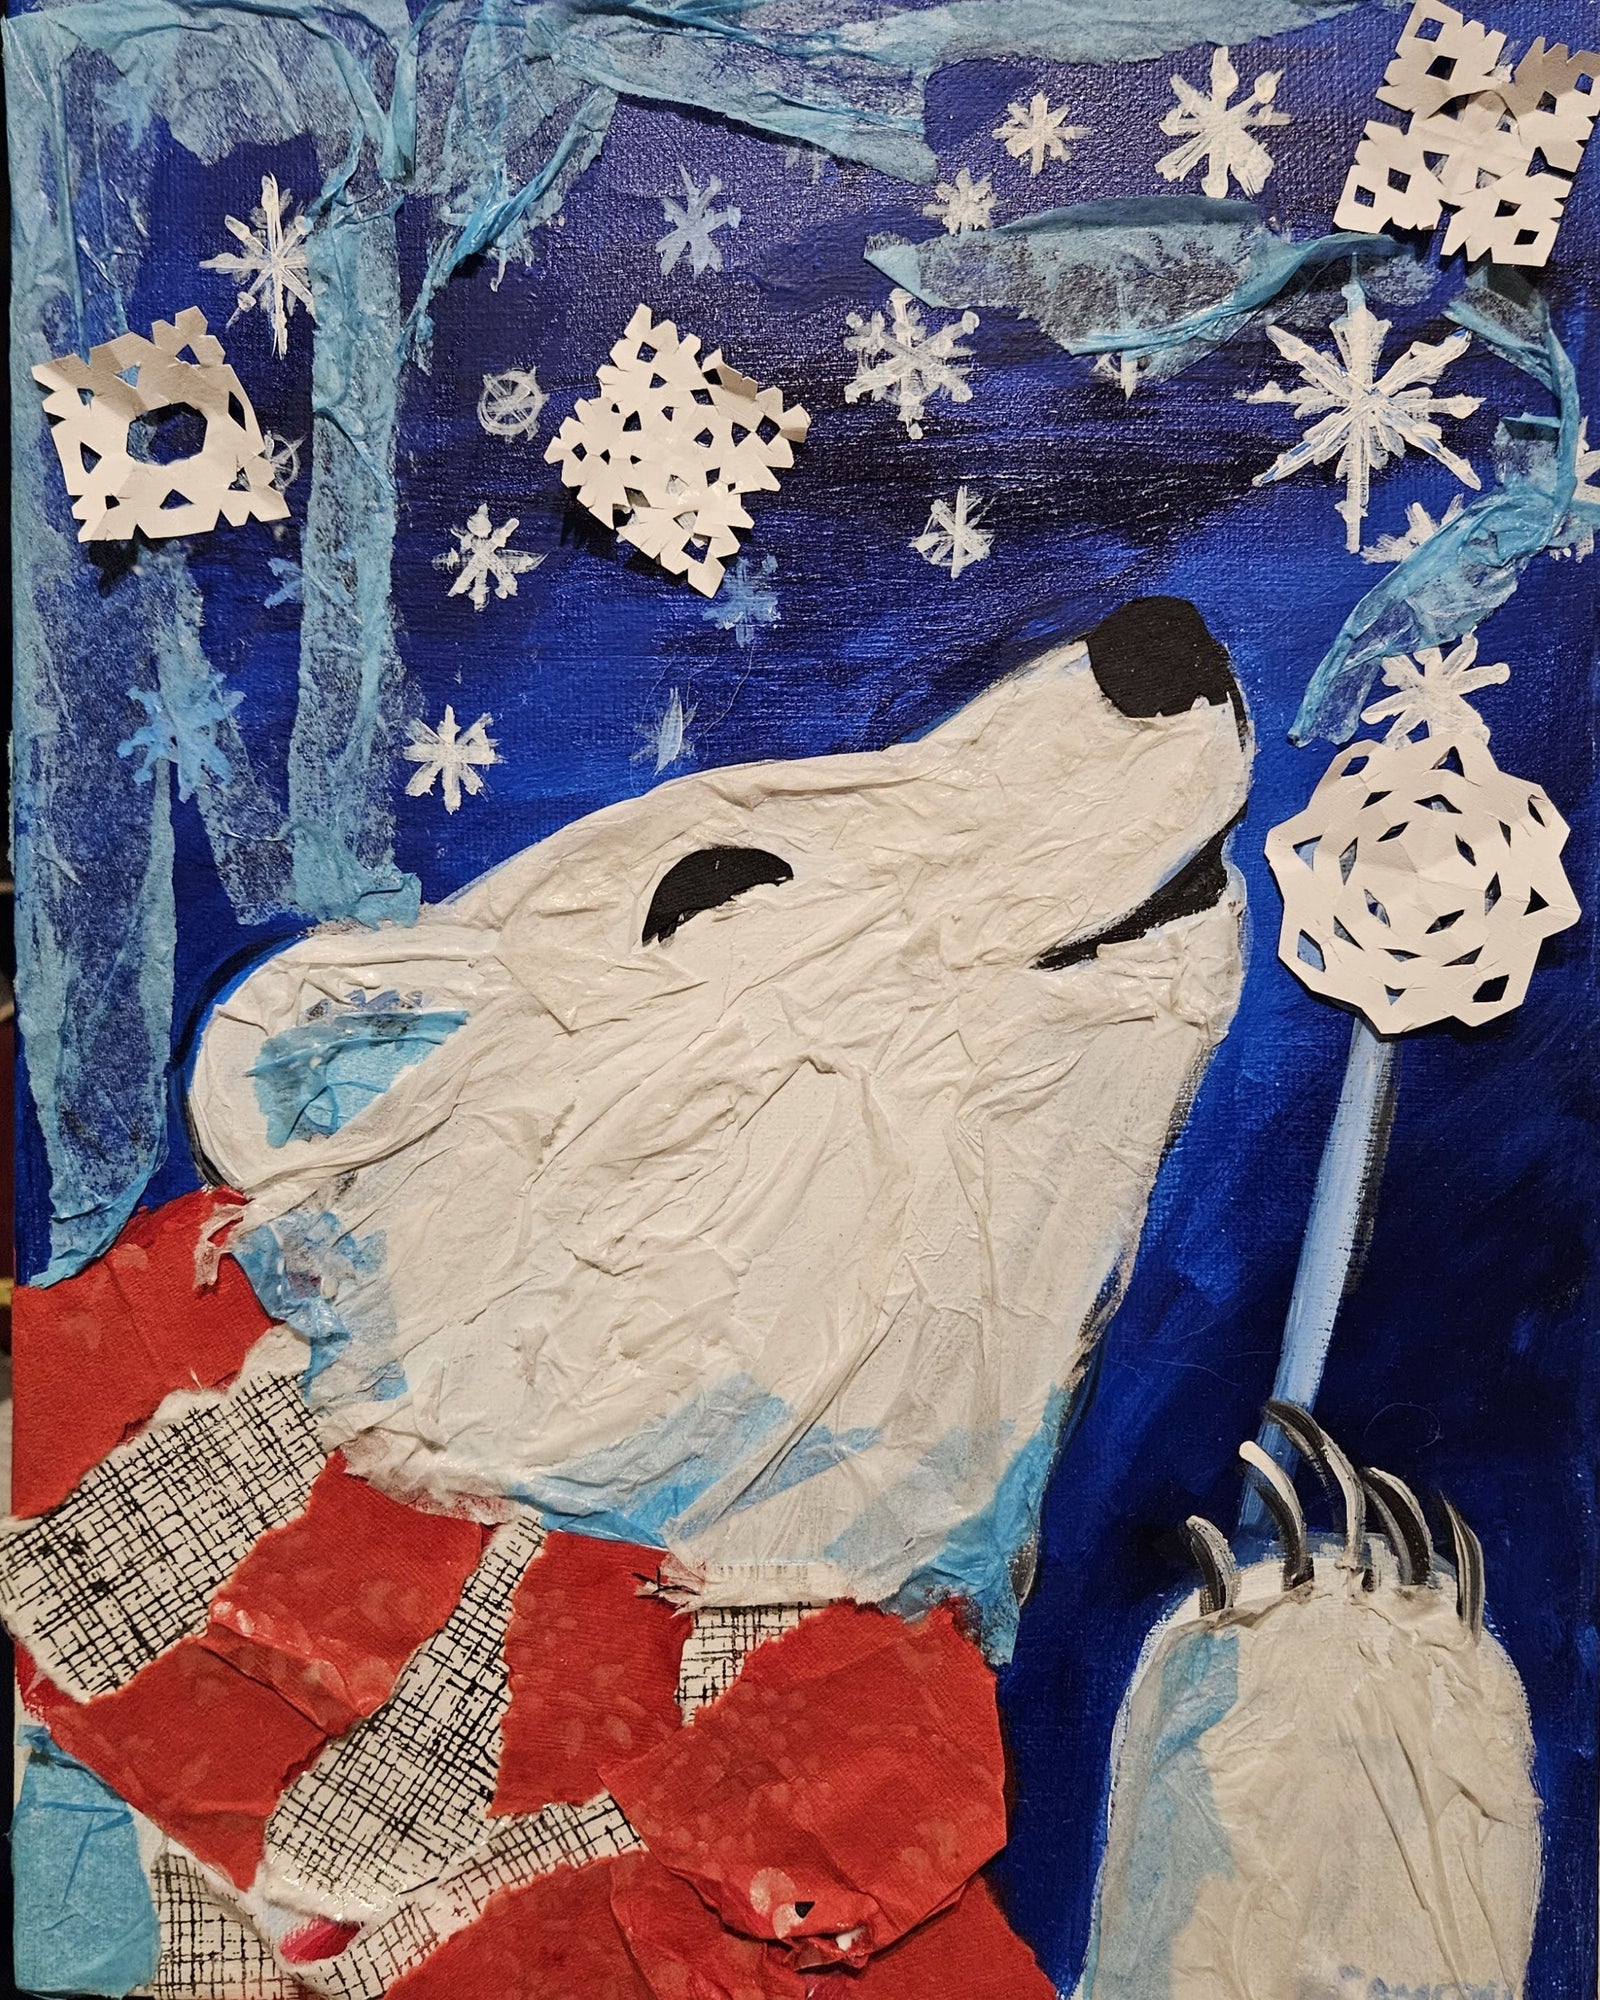 PAINTING CLASS: Polar Bear Paint & Collage on Wood Panel